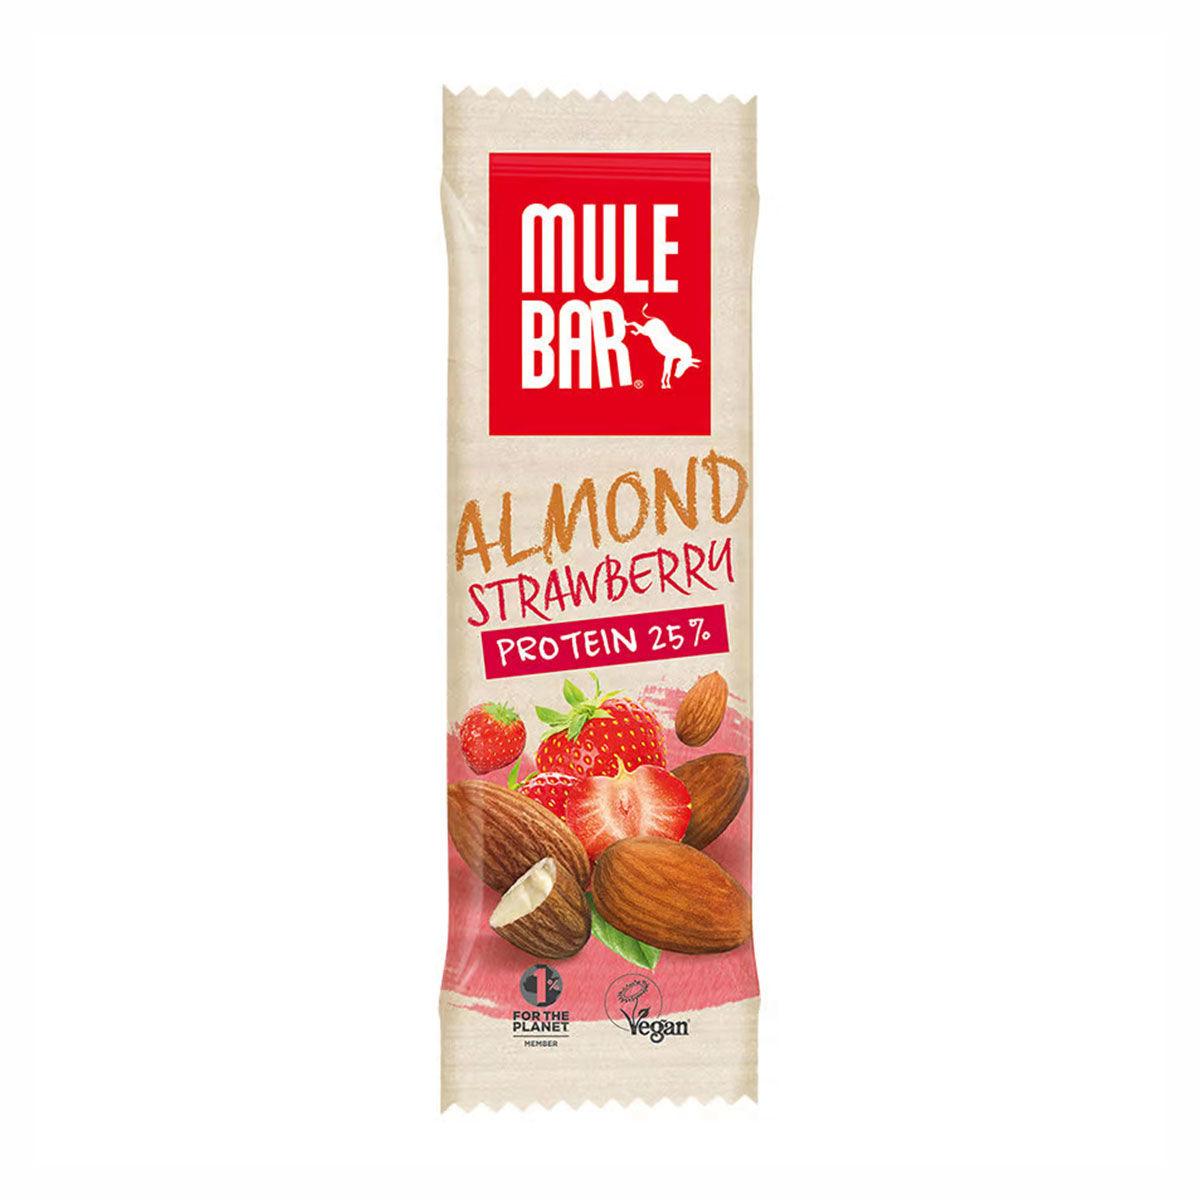 Mulebar protein bar - Almond, strawberry